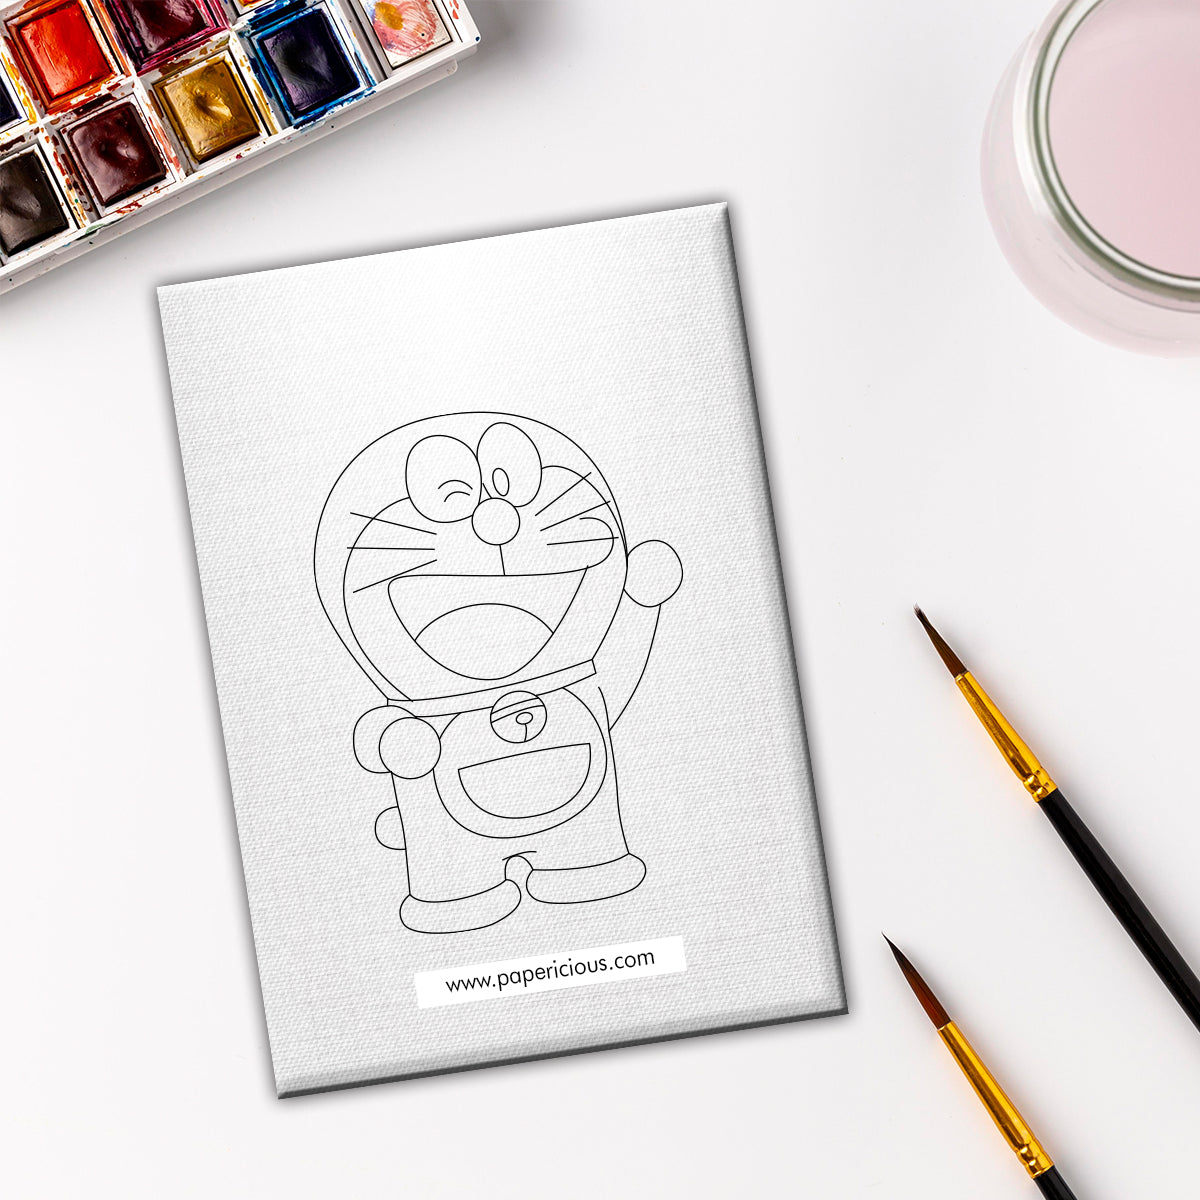 Pre Marked DIY Canvas - Doraemon Style 5